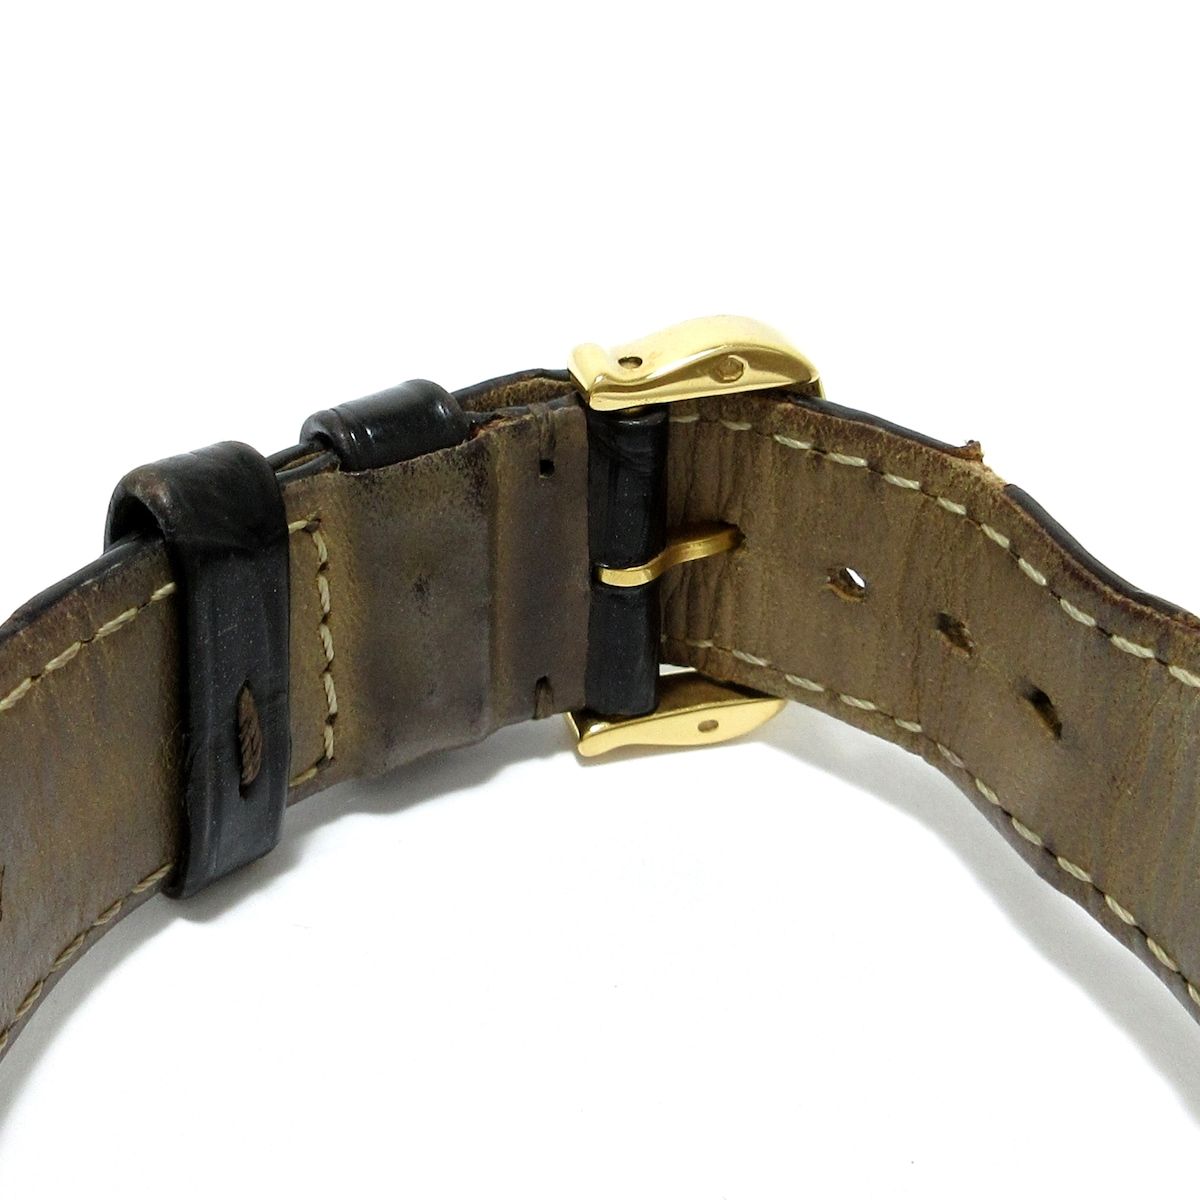 Cartier(カルティエ) 腕時計 ロンド ルイ カルティエ W6800151 レディース K18PG/革ベルト アイボリー